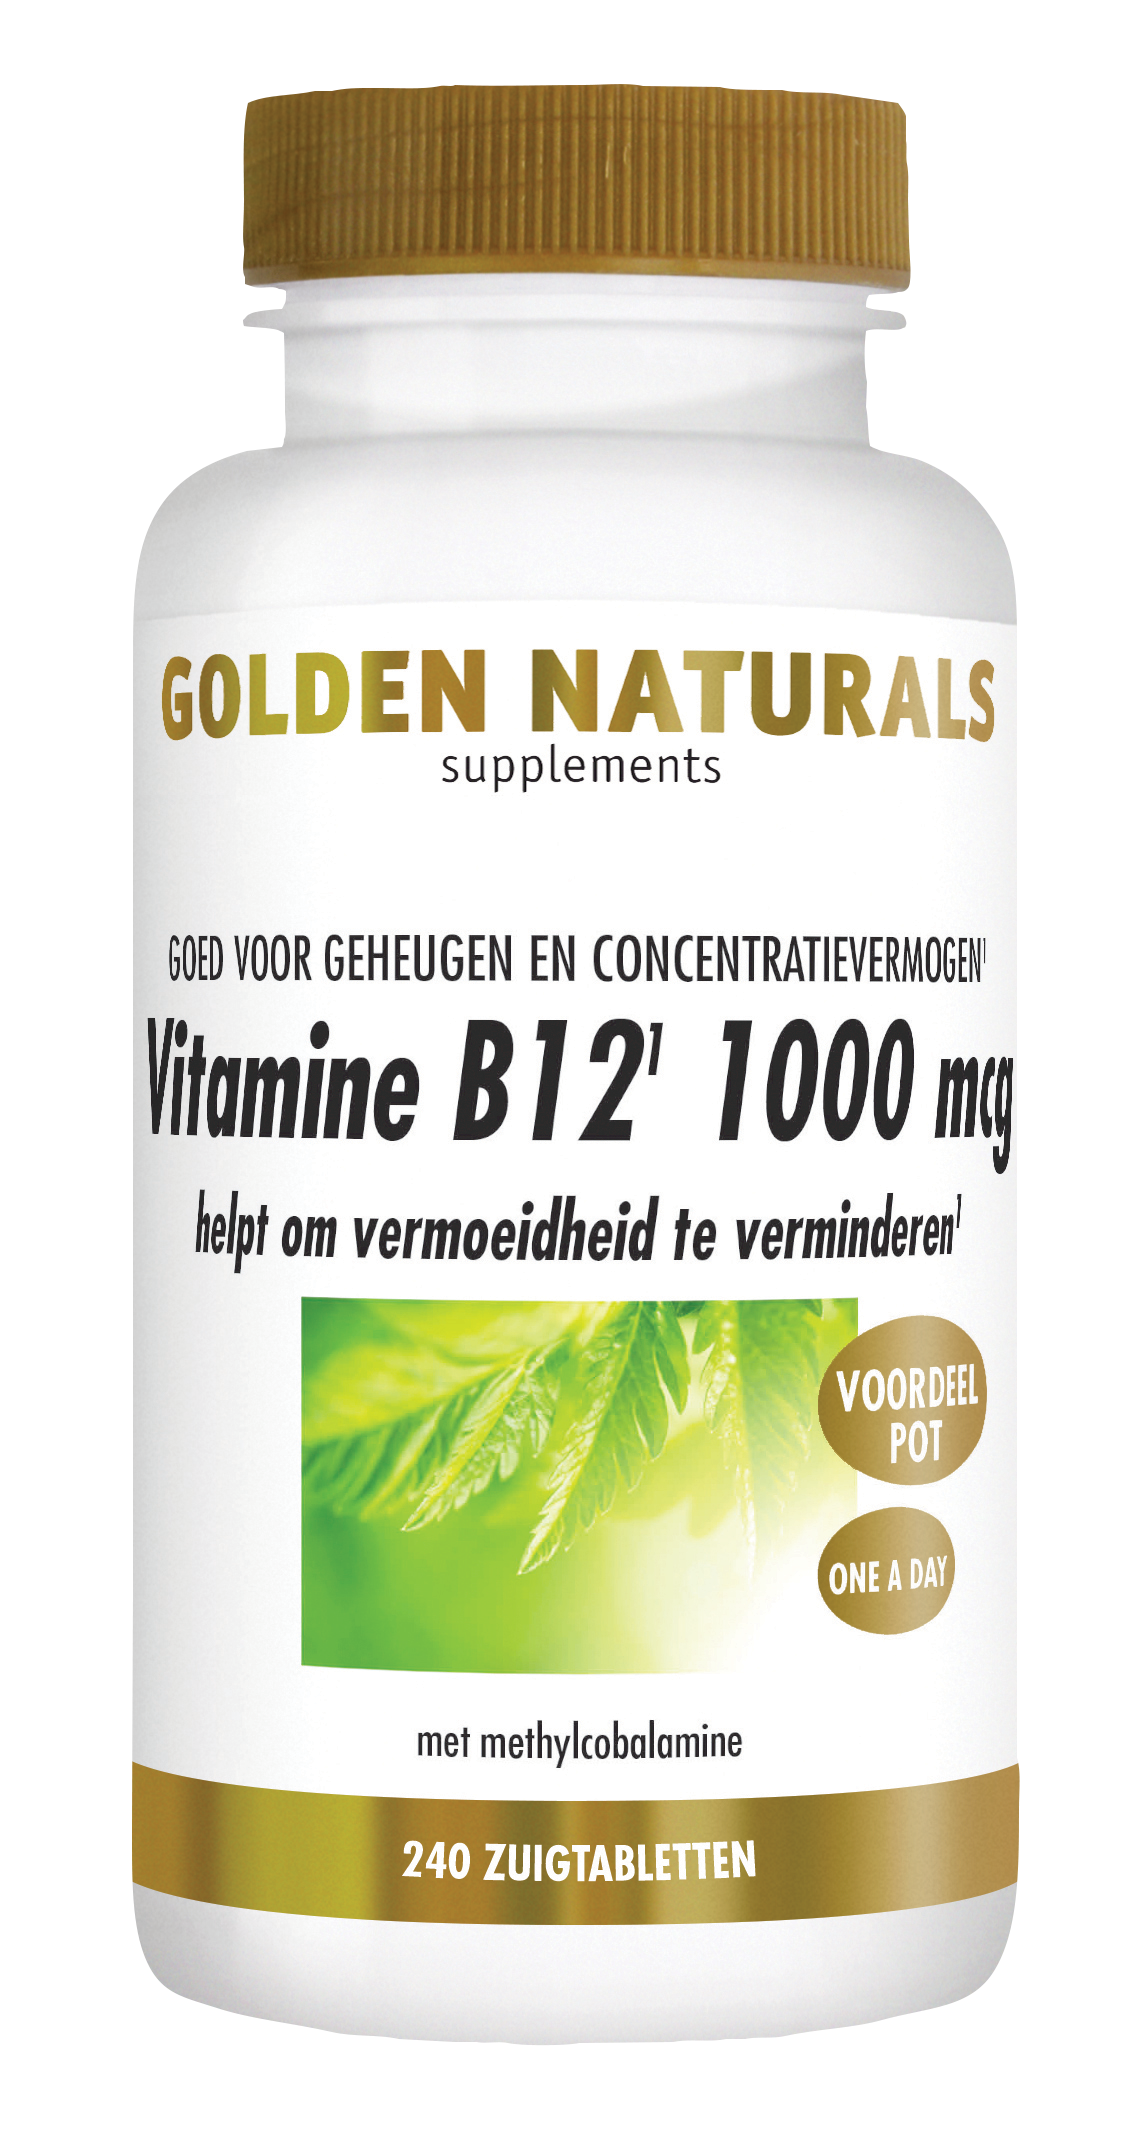 Franje radiator Ondraaglijk Golden Naturals Vitamine B12 1000 mcg